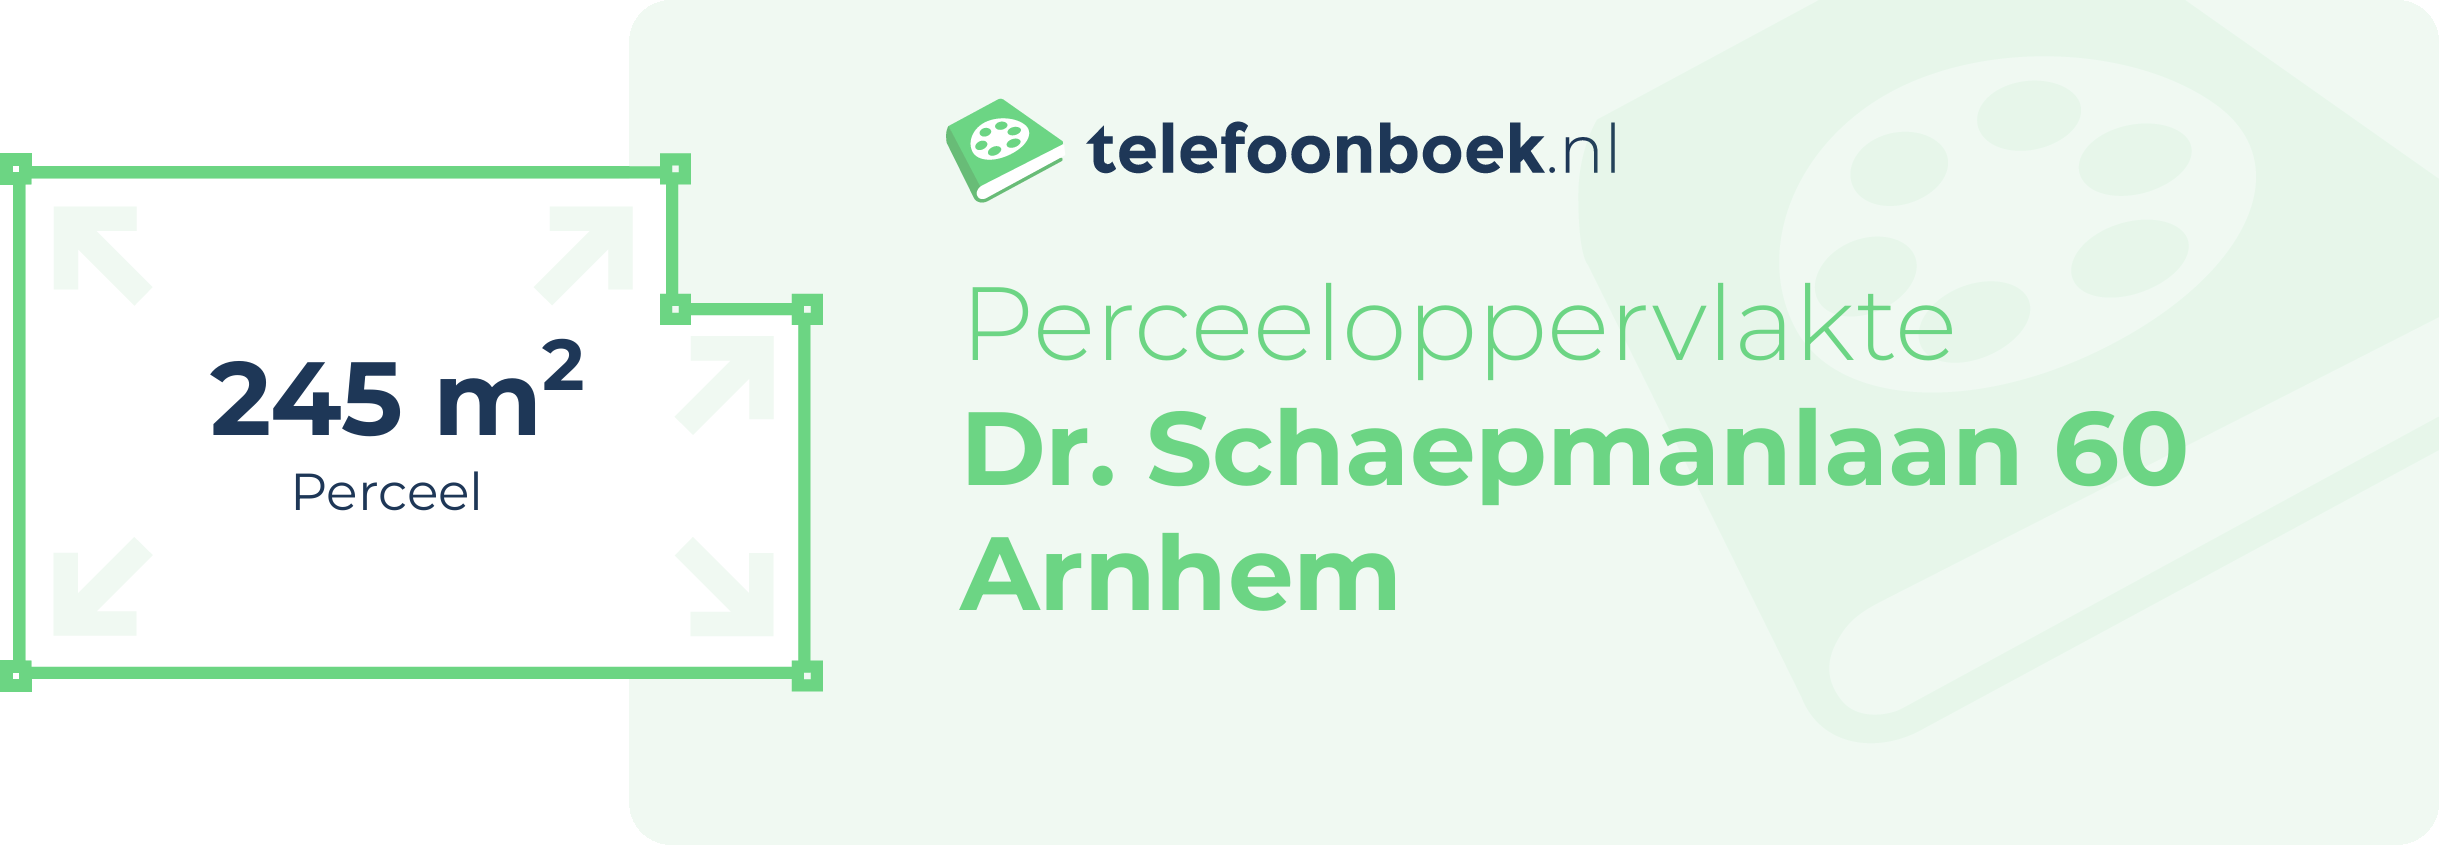 Perceeloppervlakte Dr. Schaepmanlaan 60 Arnhem